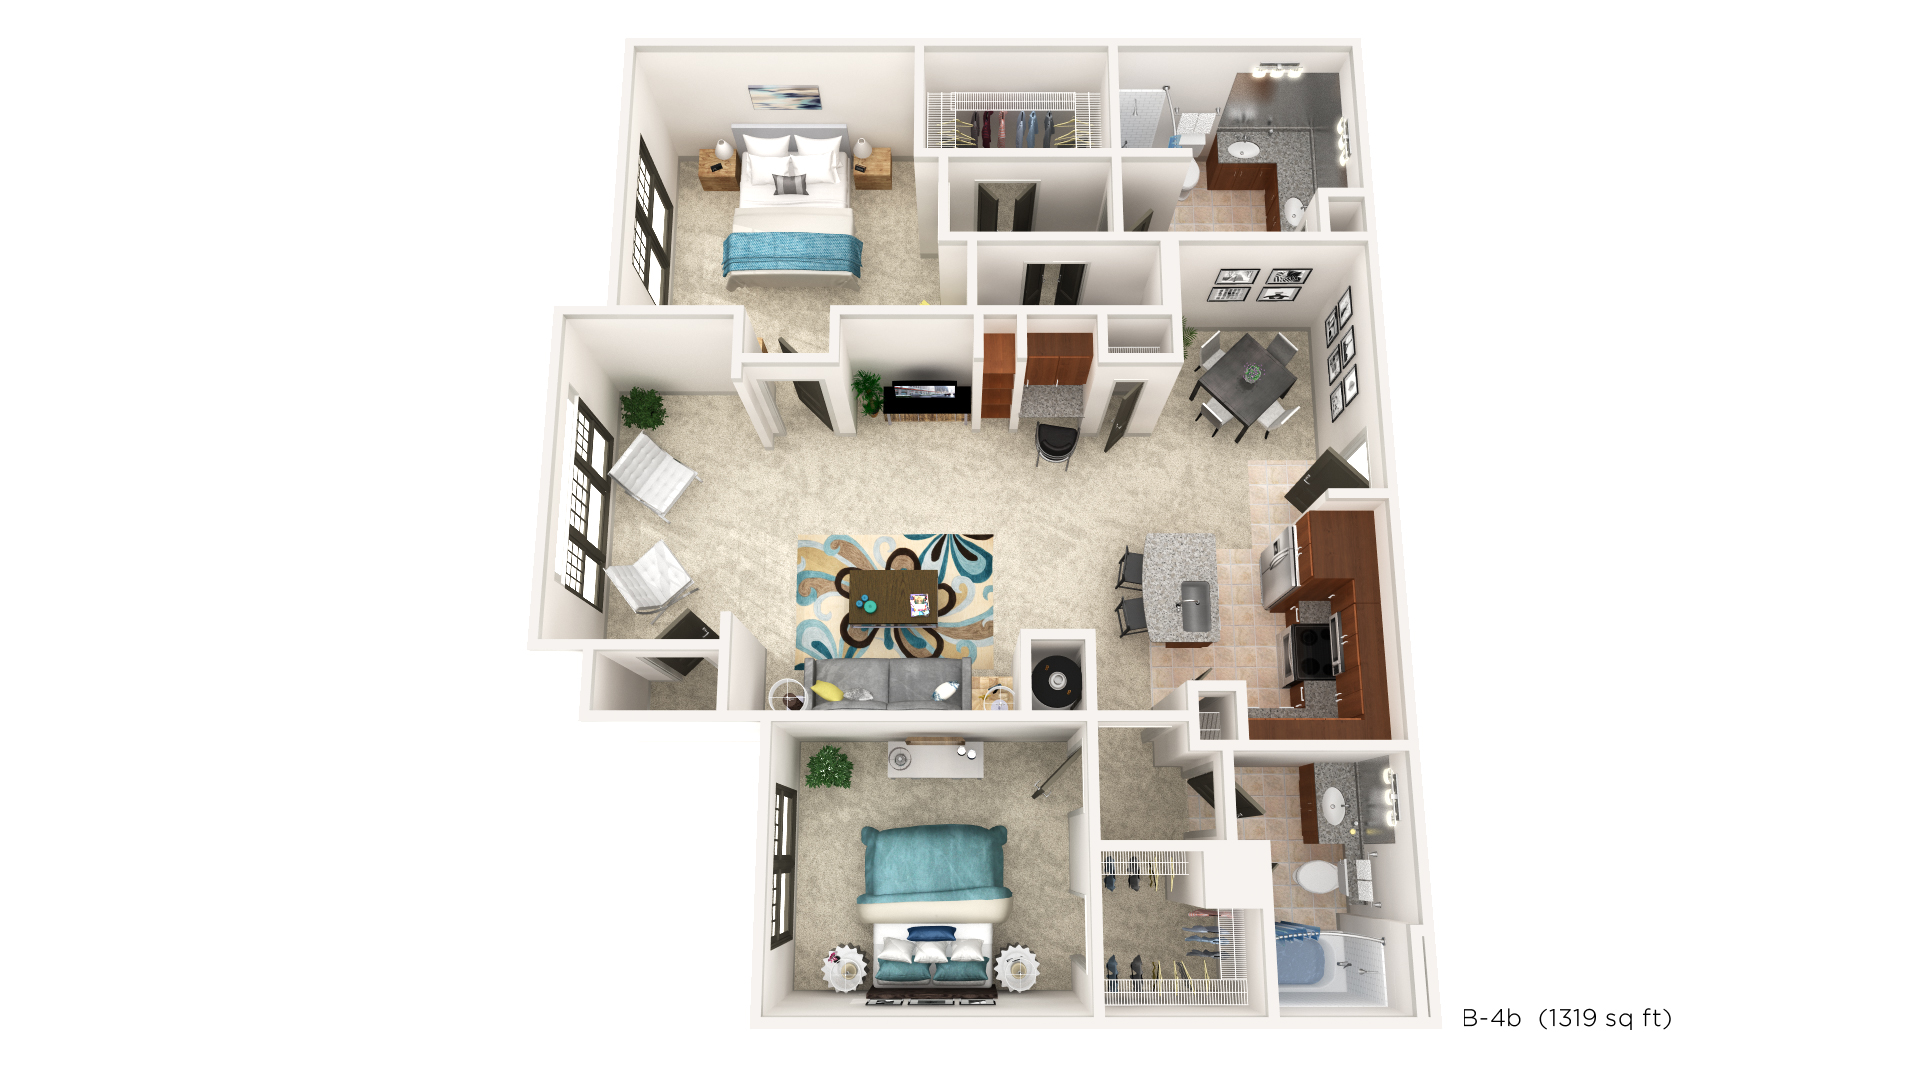 Brookleigh Flats Luxury Apartment Homes - Floorplan - B-4B